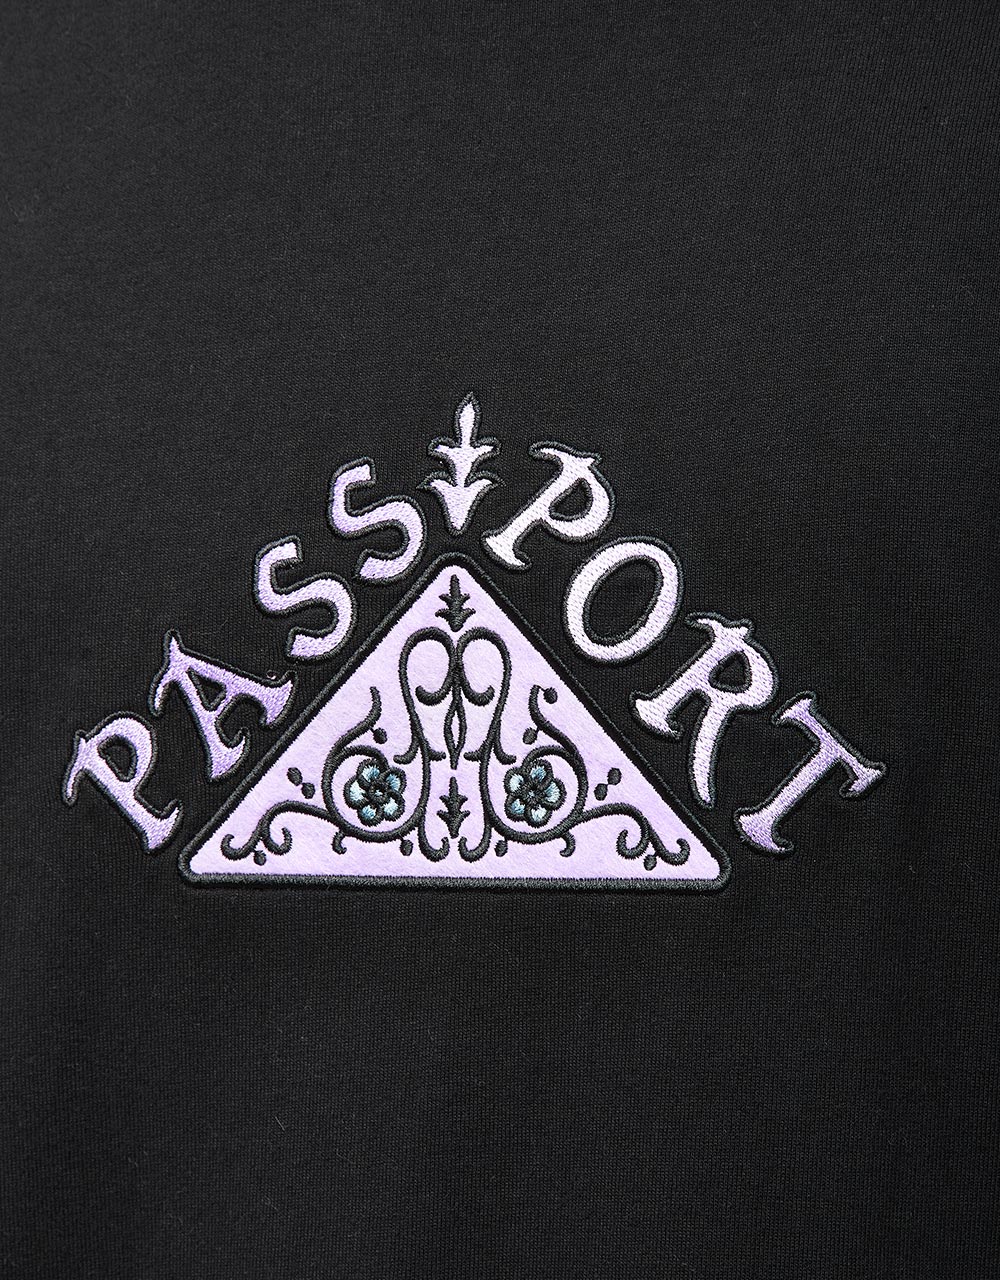 Pass Port Manuscript T-Shirt - Black